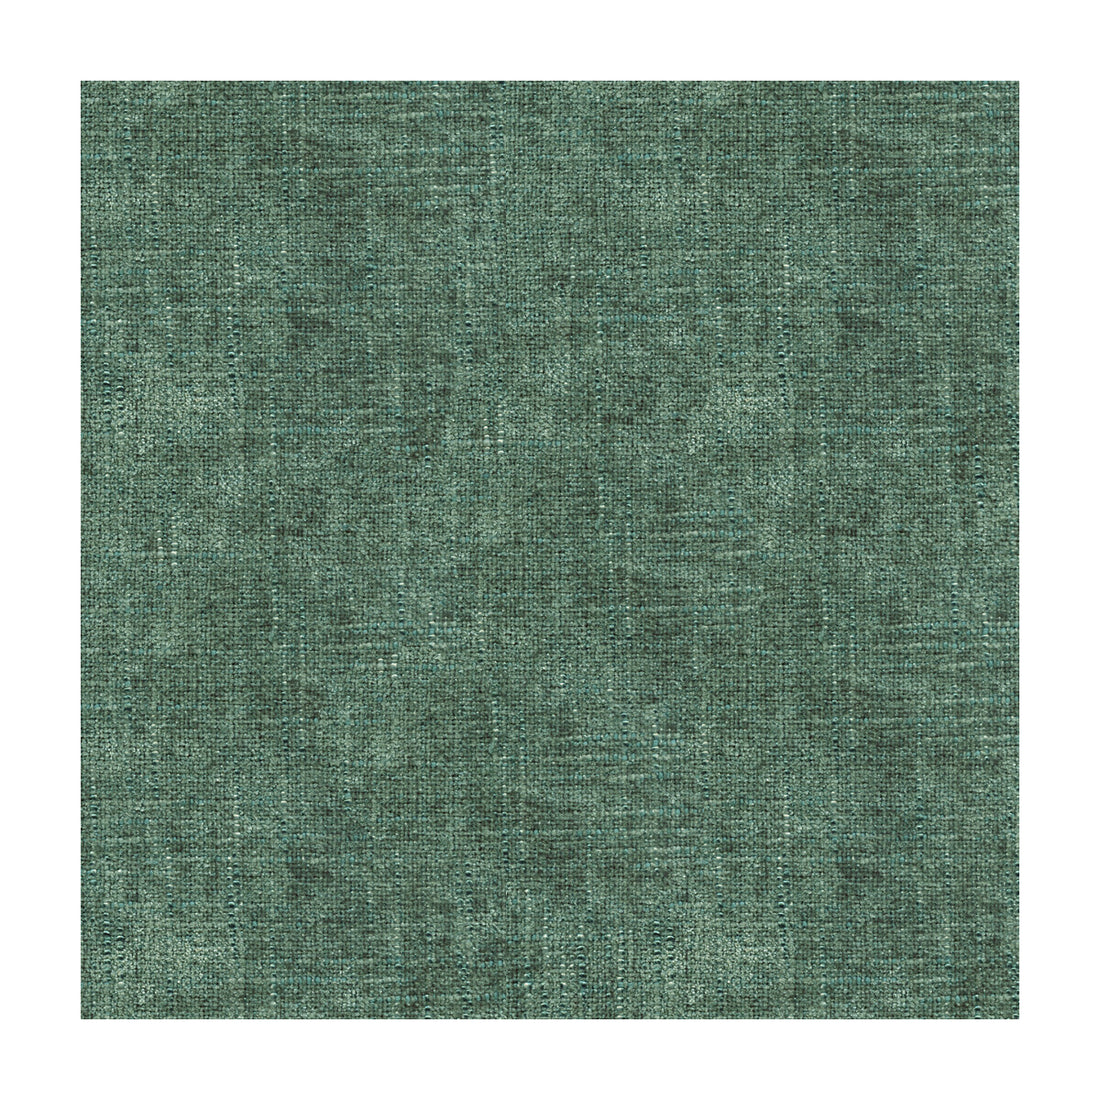 Kravet Smart fabric in 33563-15 color - pattern 33563.15.0 - by Kravet Smart